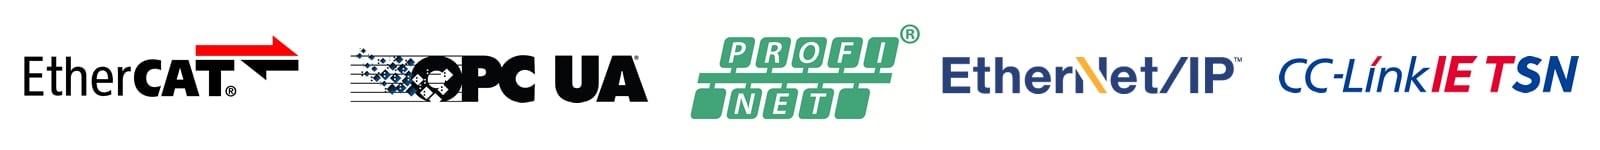 ethernet-logo.fw_